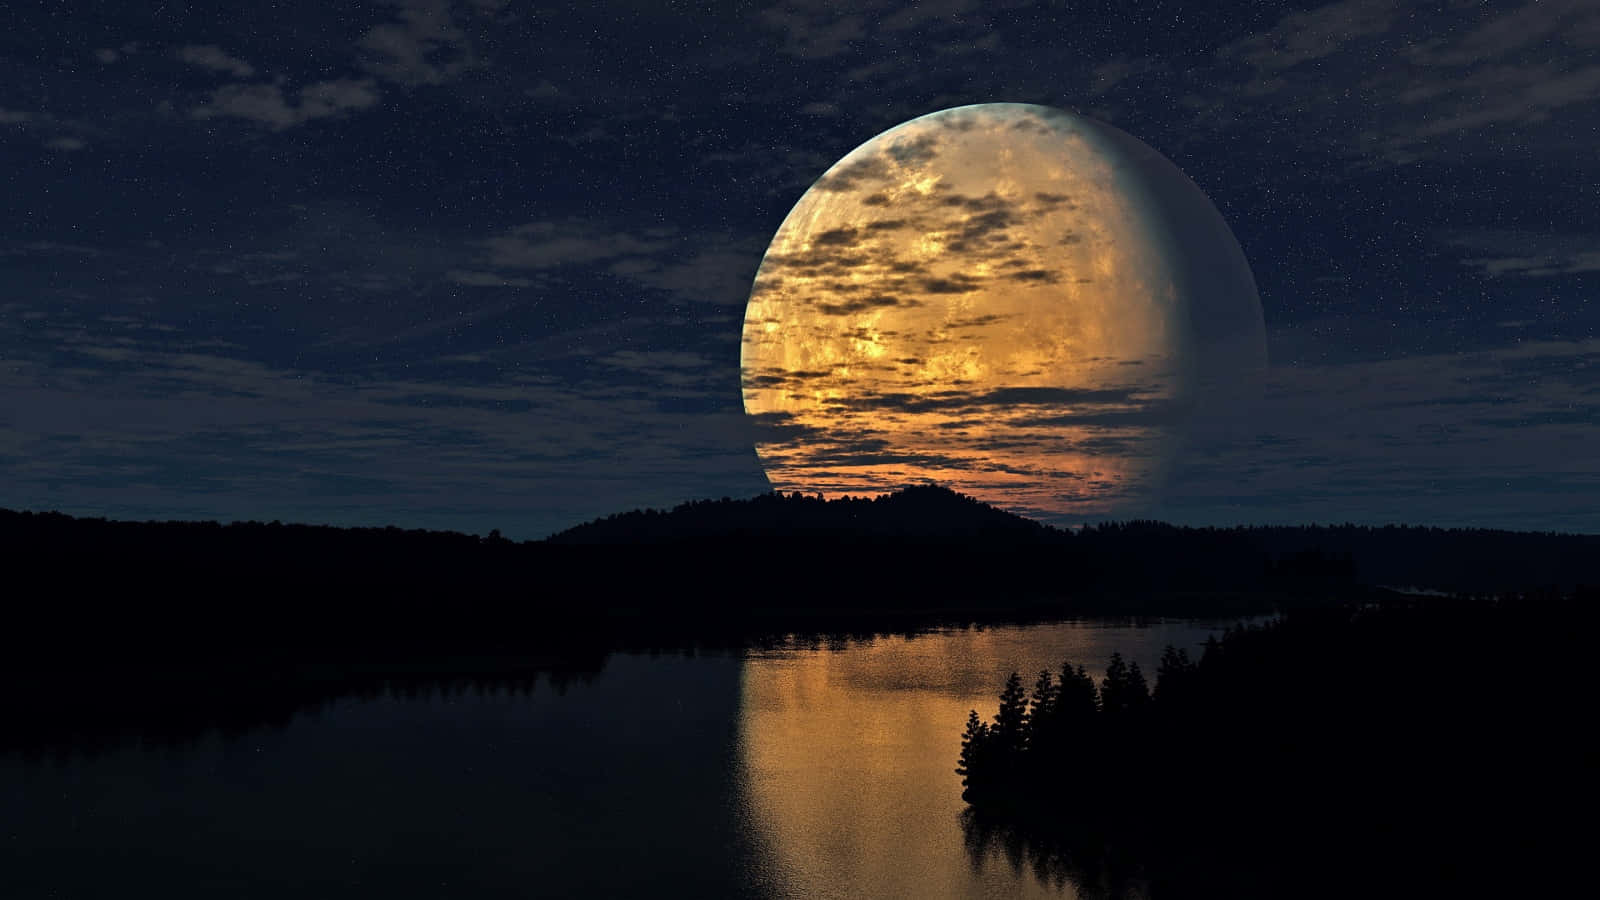 "Let's Gaze Upon the Beautiful Moon"